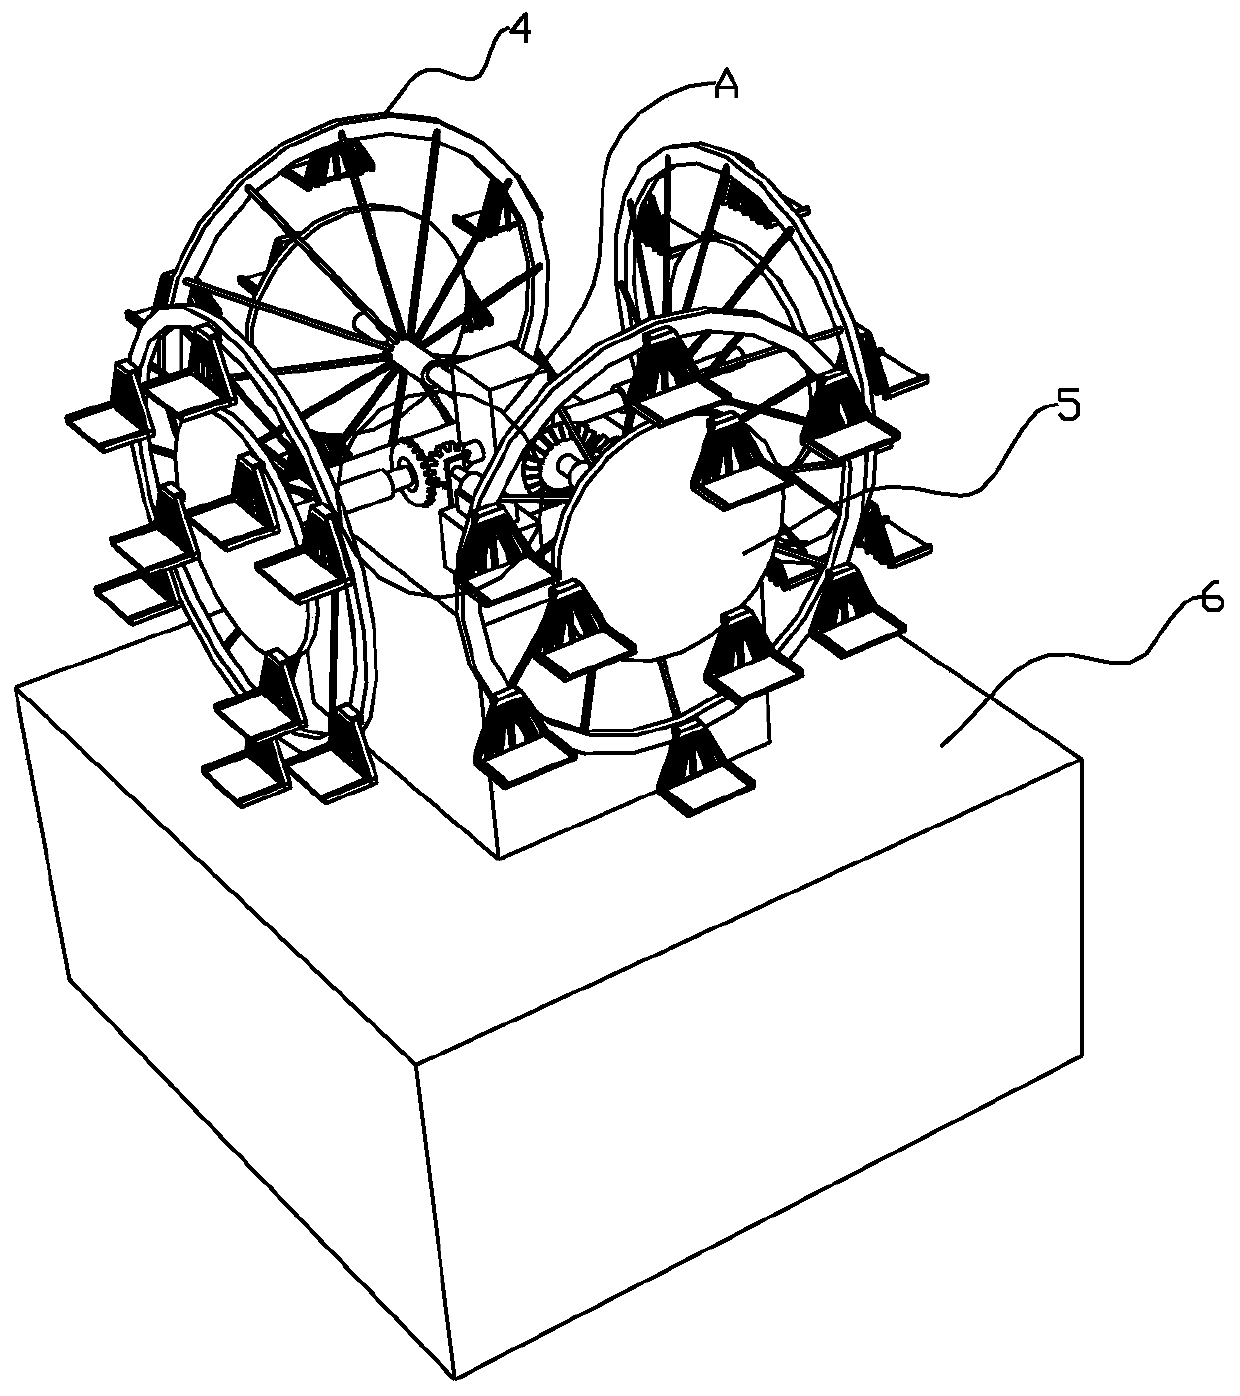 Exhibition model rotary exhibition rack